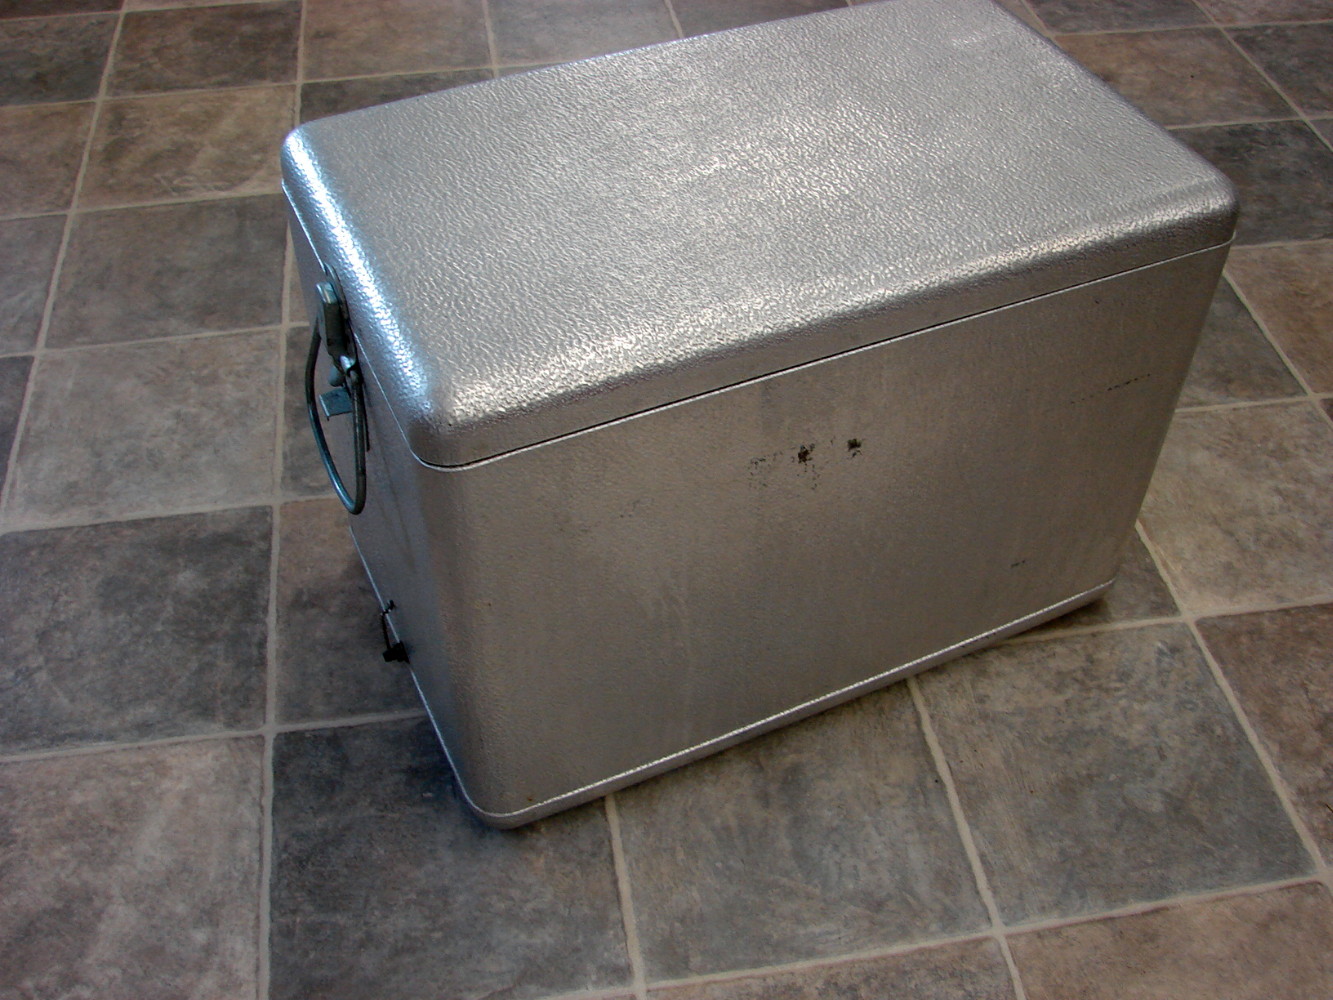 Vintage Cronco Cooler Aluminum Clad Ice Chest Cronstroms Manufacturing